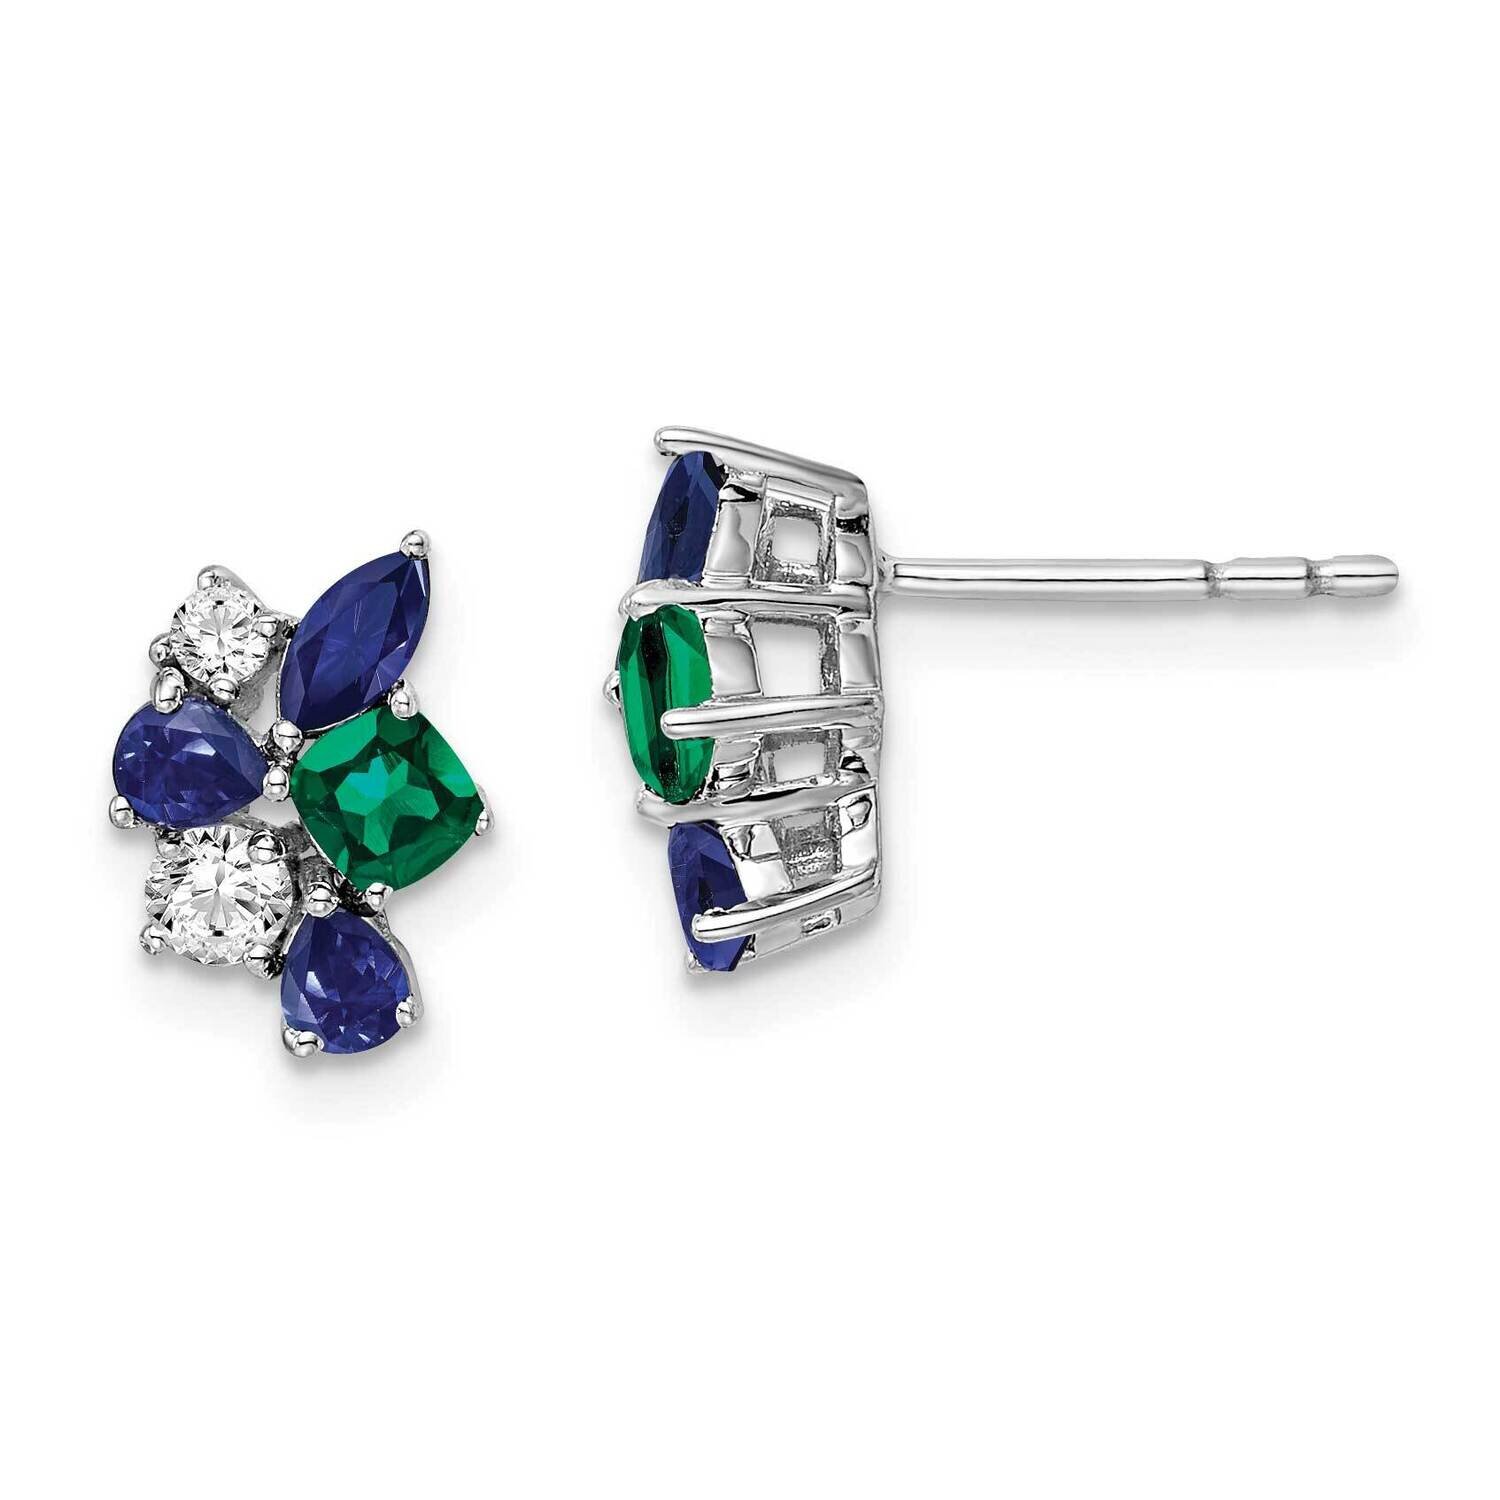 3 Created Blue Sapphires 1 Created Emerald Earrings 14k White Gold Lab Grown Diamond EM7507-CSA-020-WLG